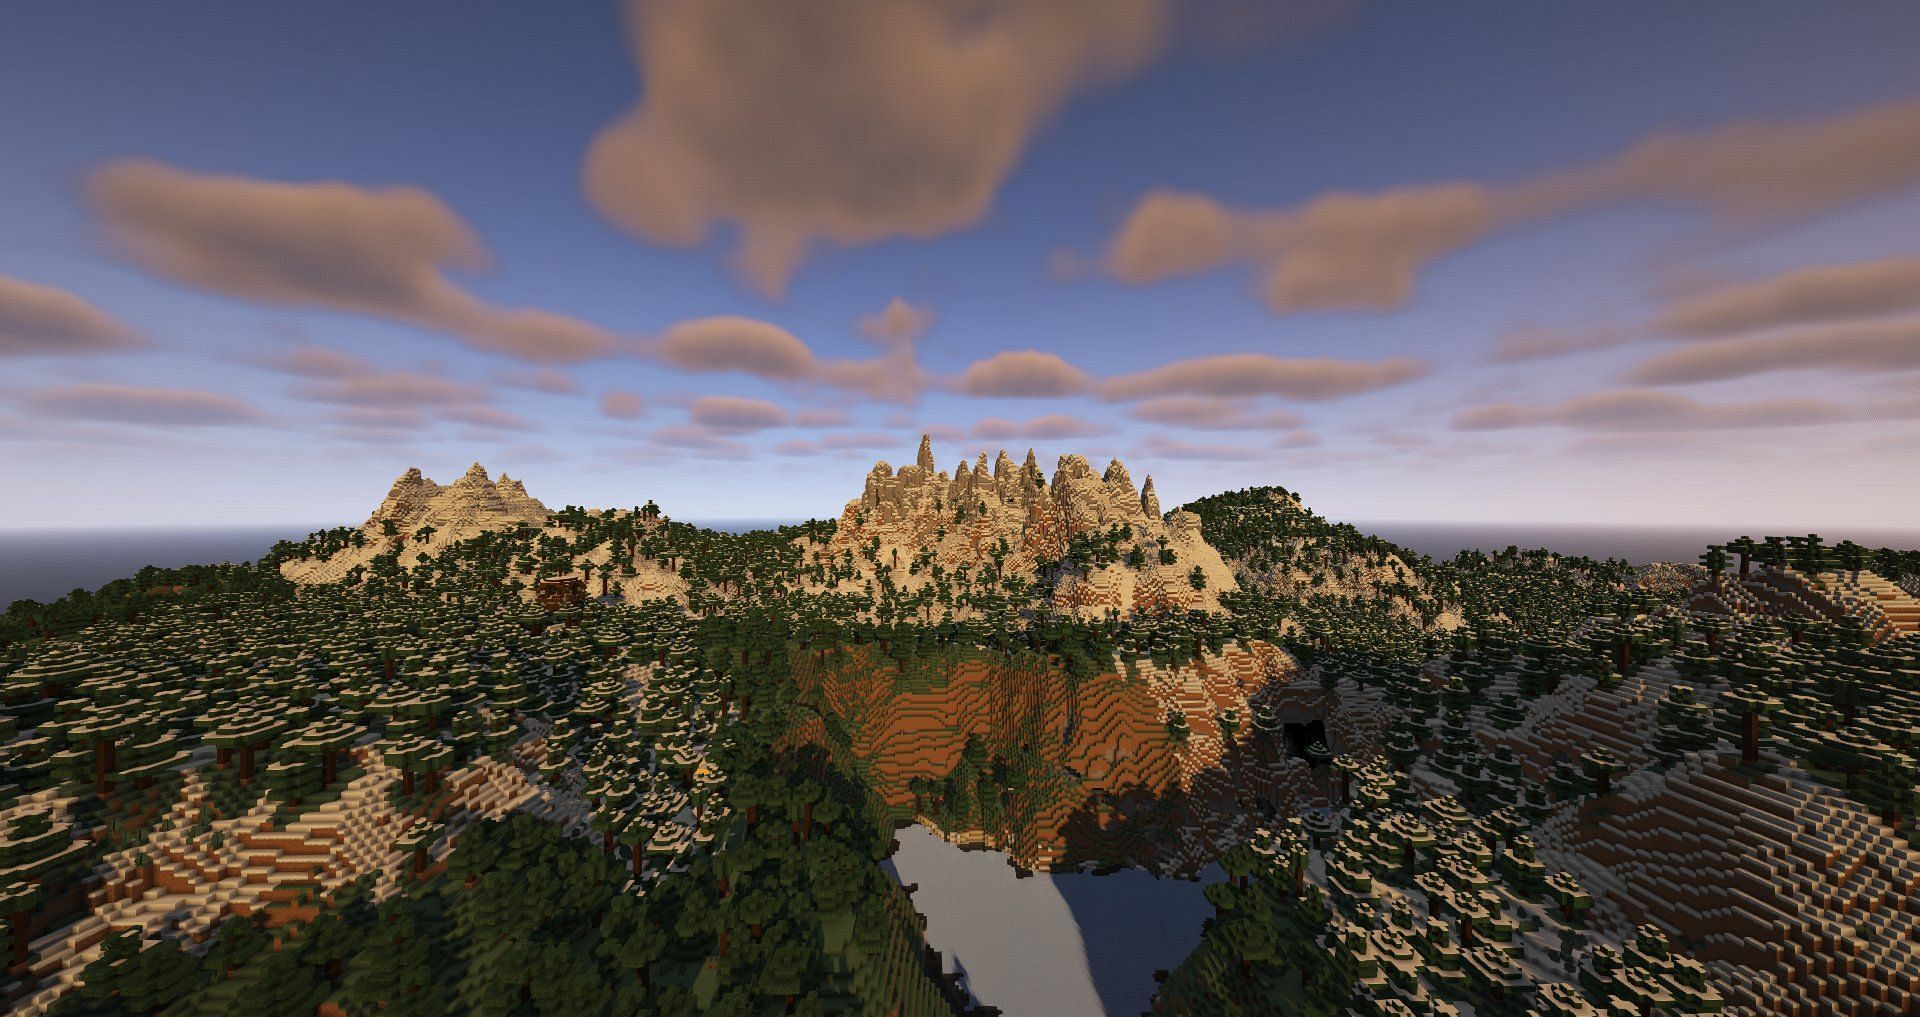 Mountains in Minecraft 1.18 (Image via BlckMoonstone on Twitter)